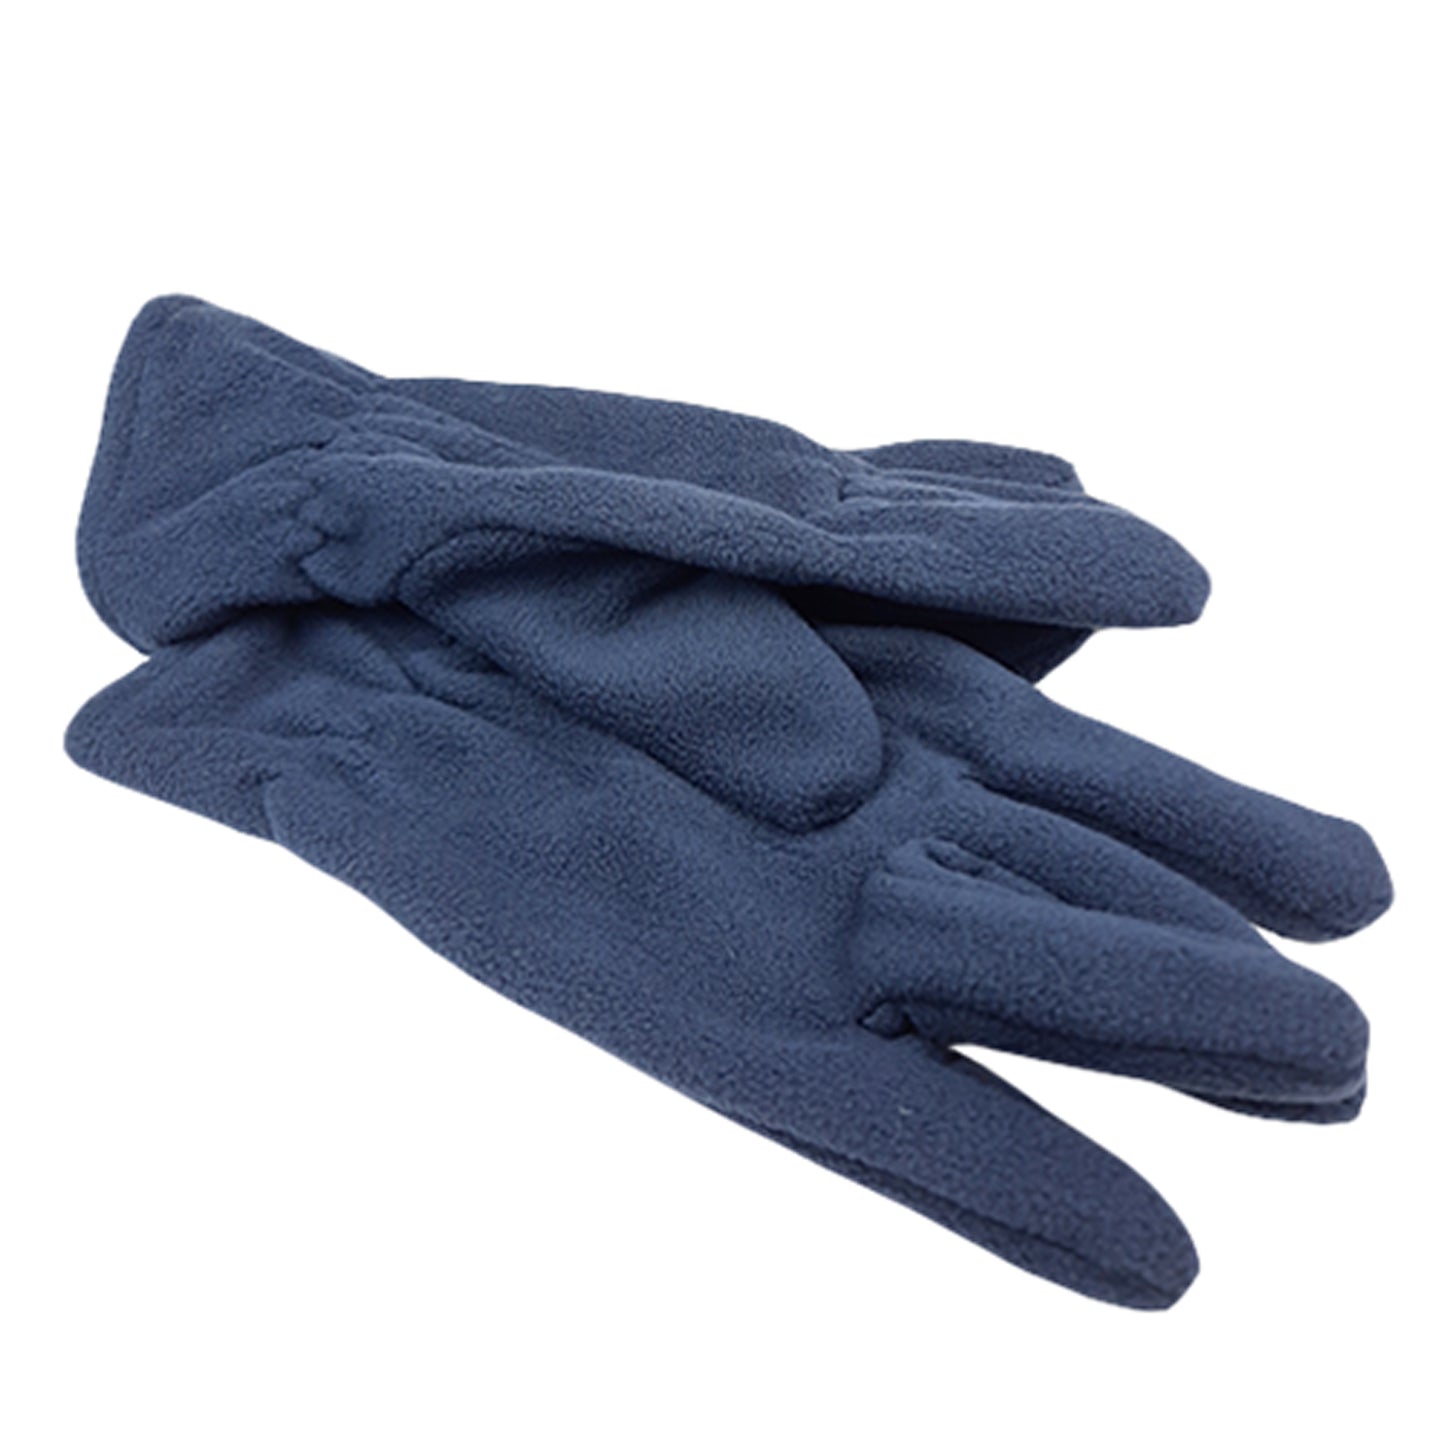 Fleece Blue Gloves 111833